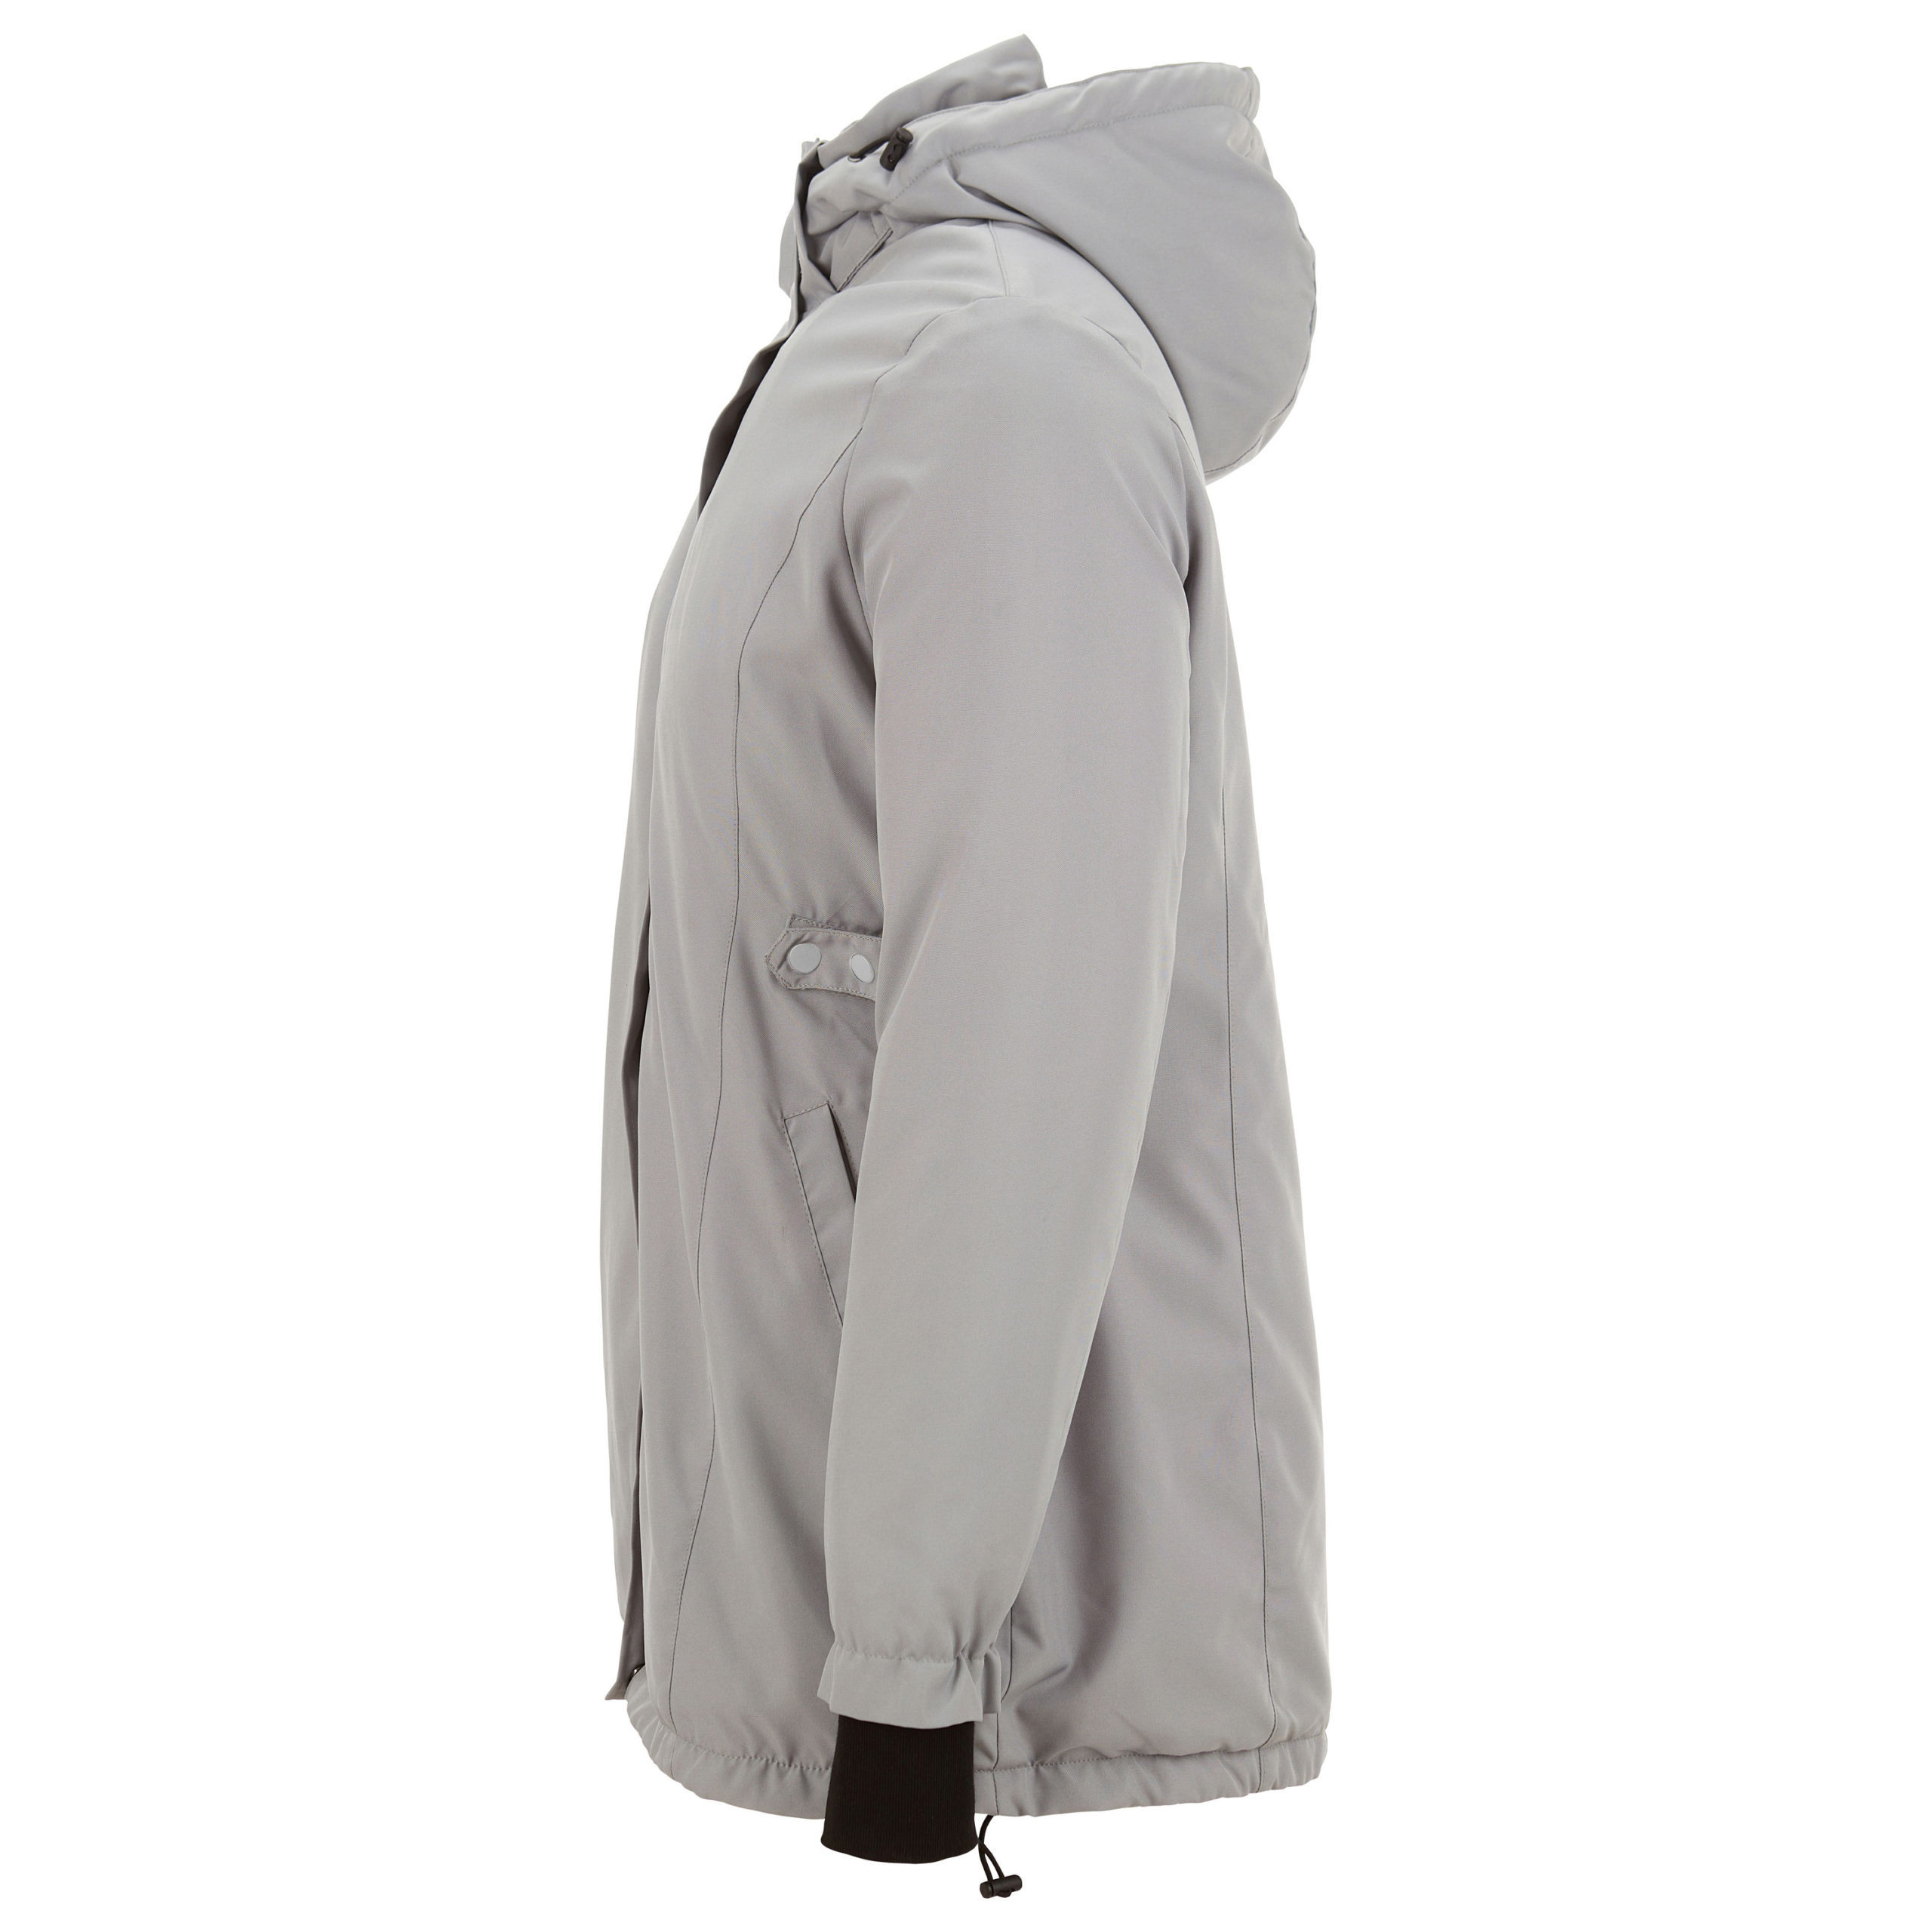 HELIOS - The Heated Coat For Women - Grey - Helios Heated Coat